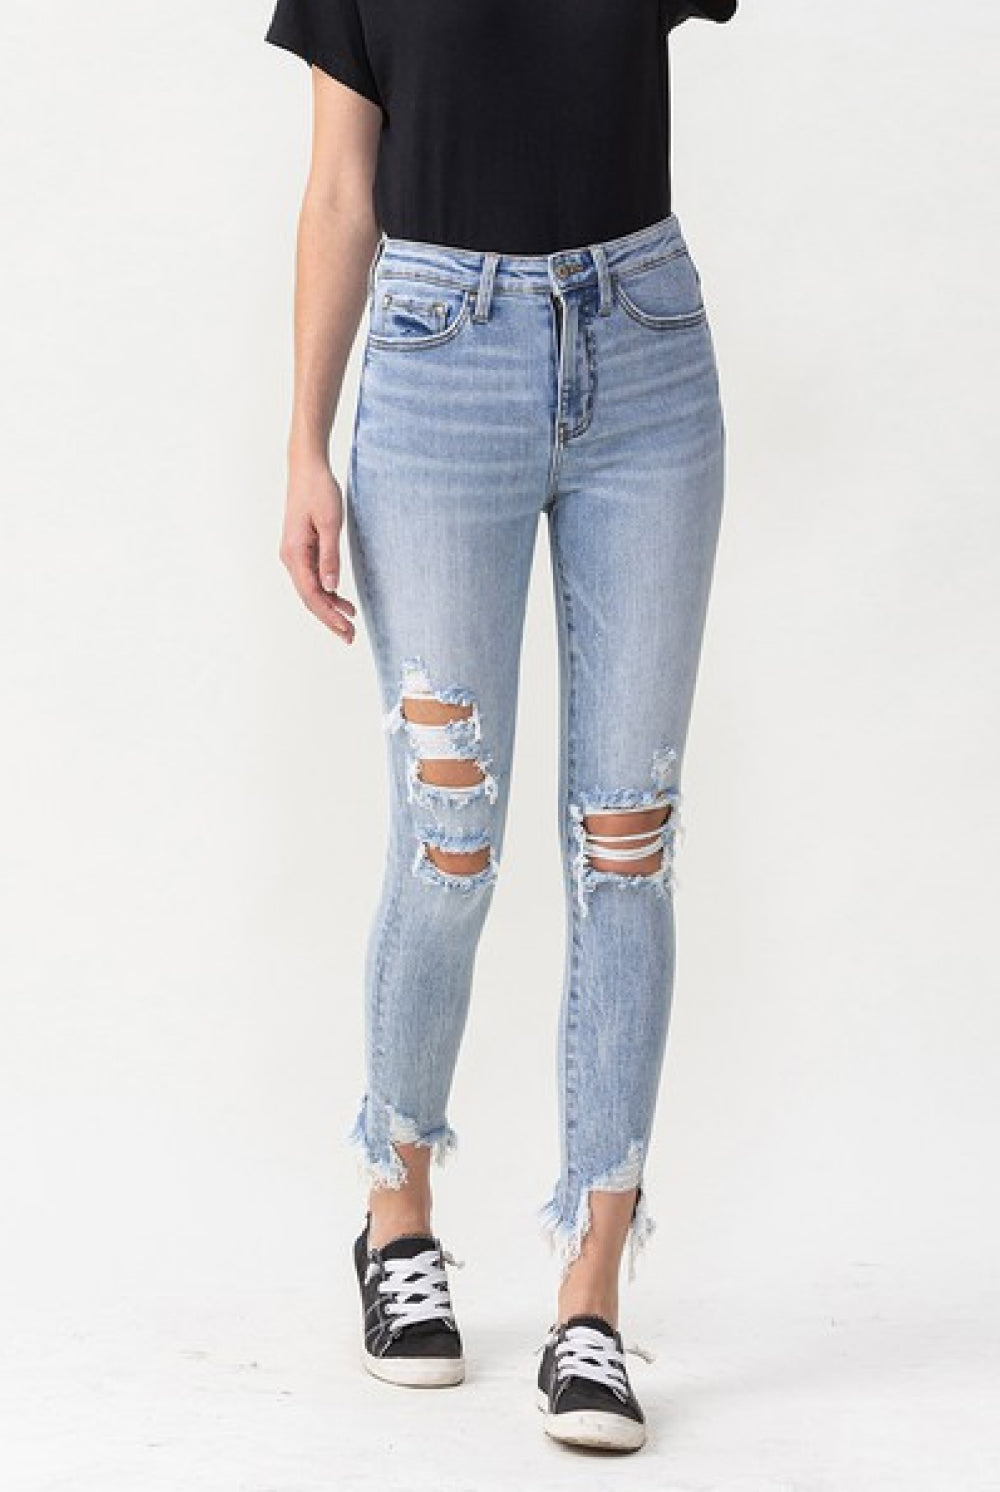 Lavender Lovervet Full Size Lauren Distressed High Rise Skinny Jeans Pants